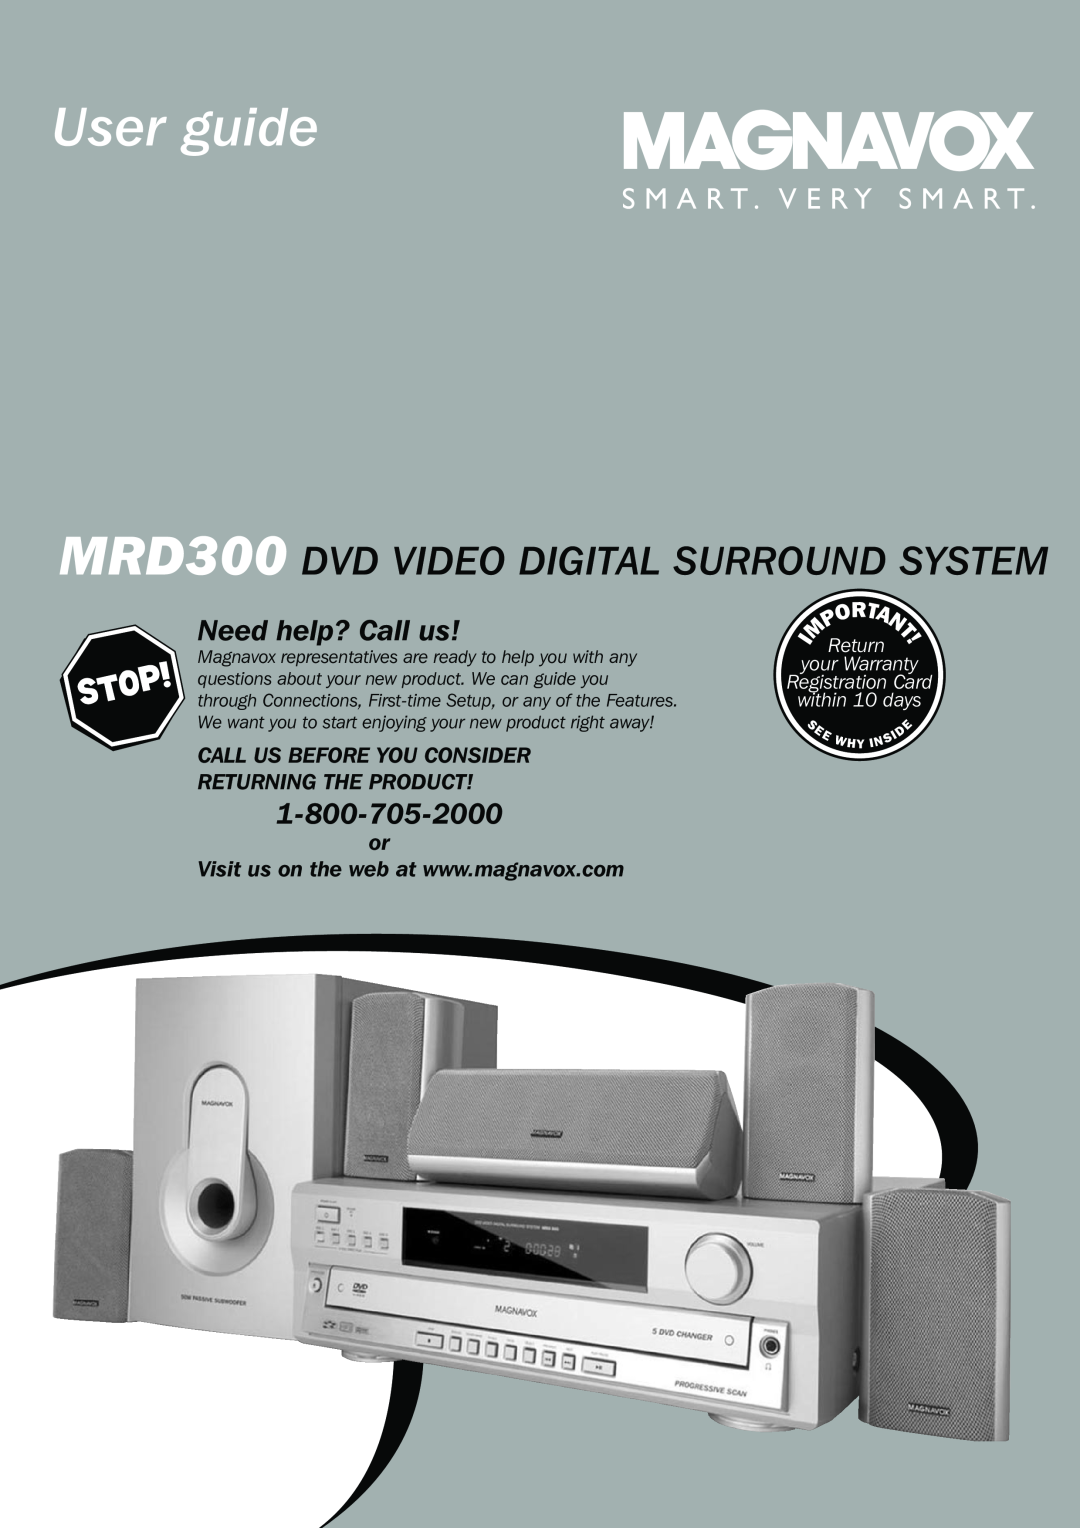 Magnavox User guide, MRD300 DVD VIDEO DIGITAL SURROUND SYSTEM, S M A R T . V E R Y S M A R T, Need help? Call us 